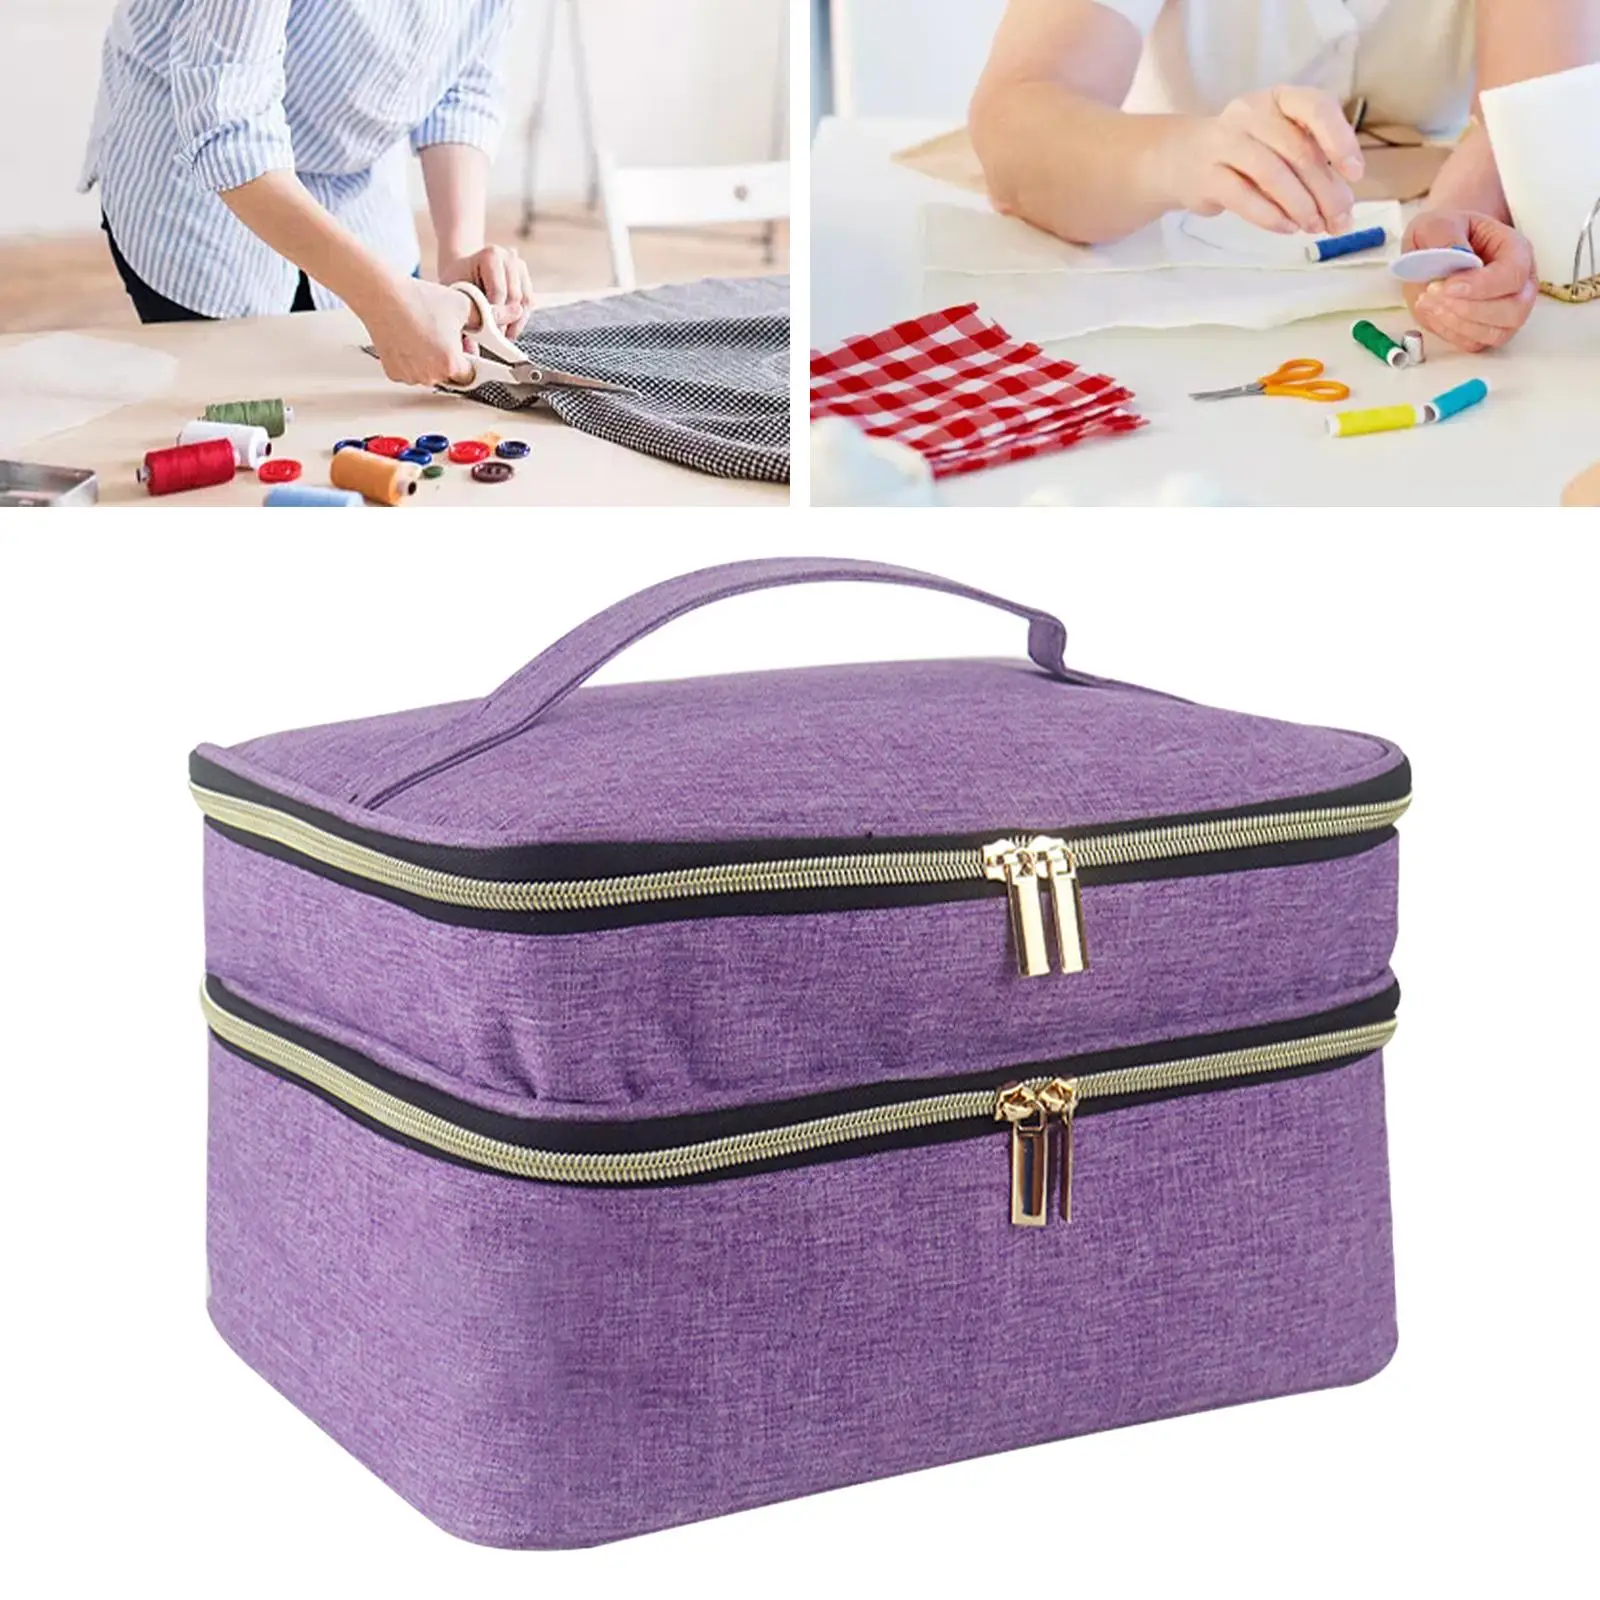 Sewing Storage Organizer Large Capacity Sewing Supplies Organiser Organizer Case for Travel